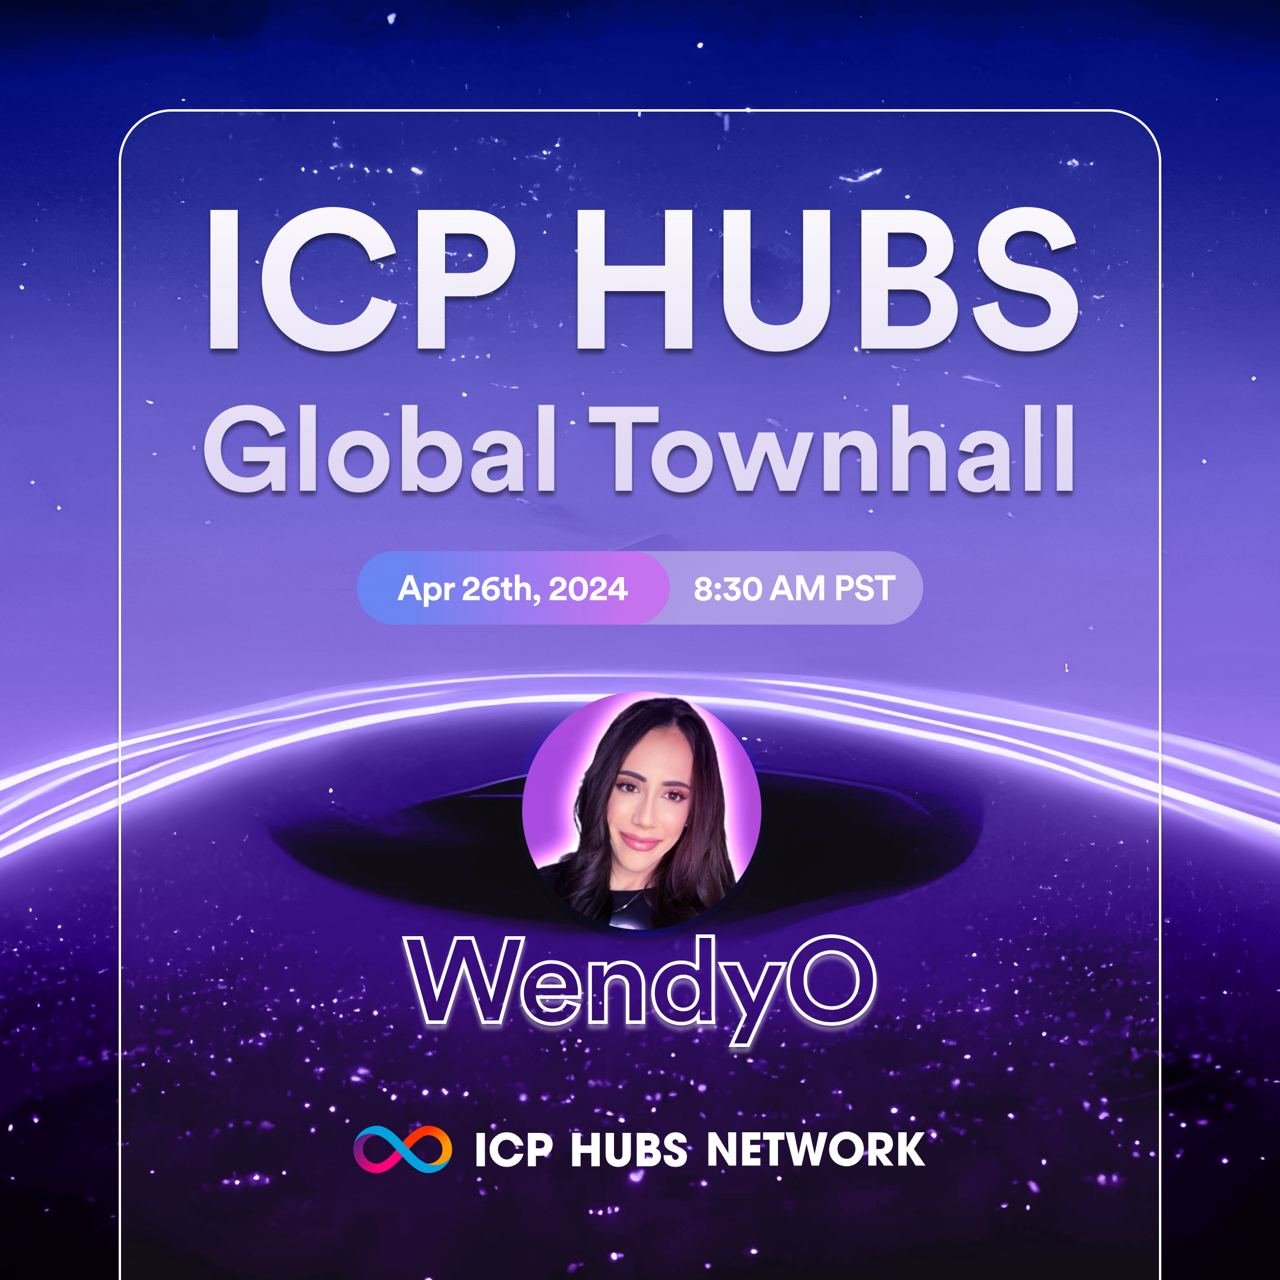 ICP HUBS GLOBAL TOWNHALL